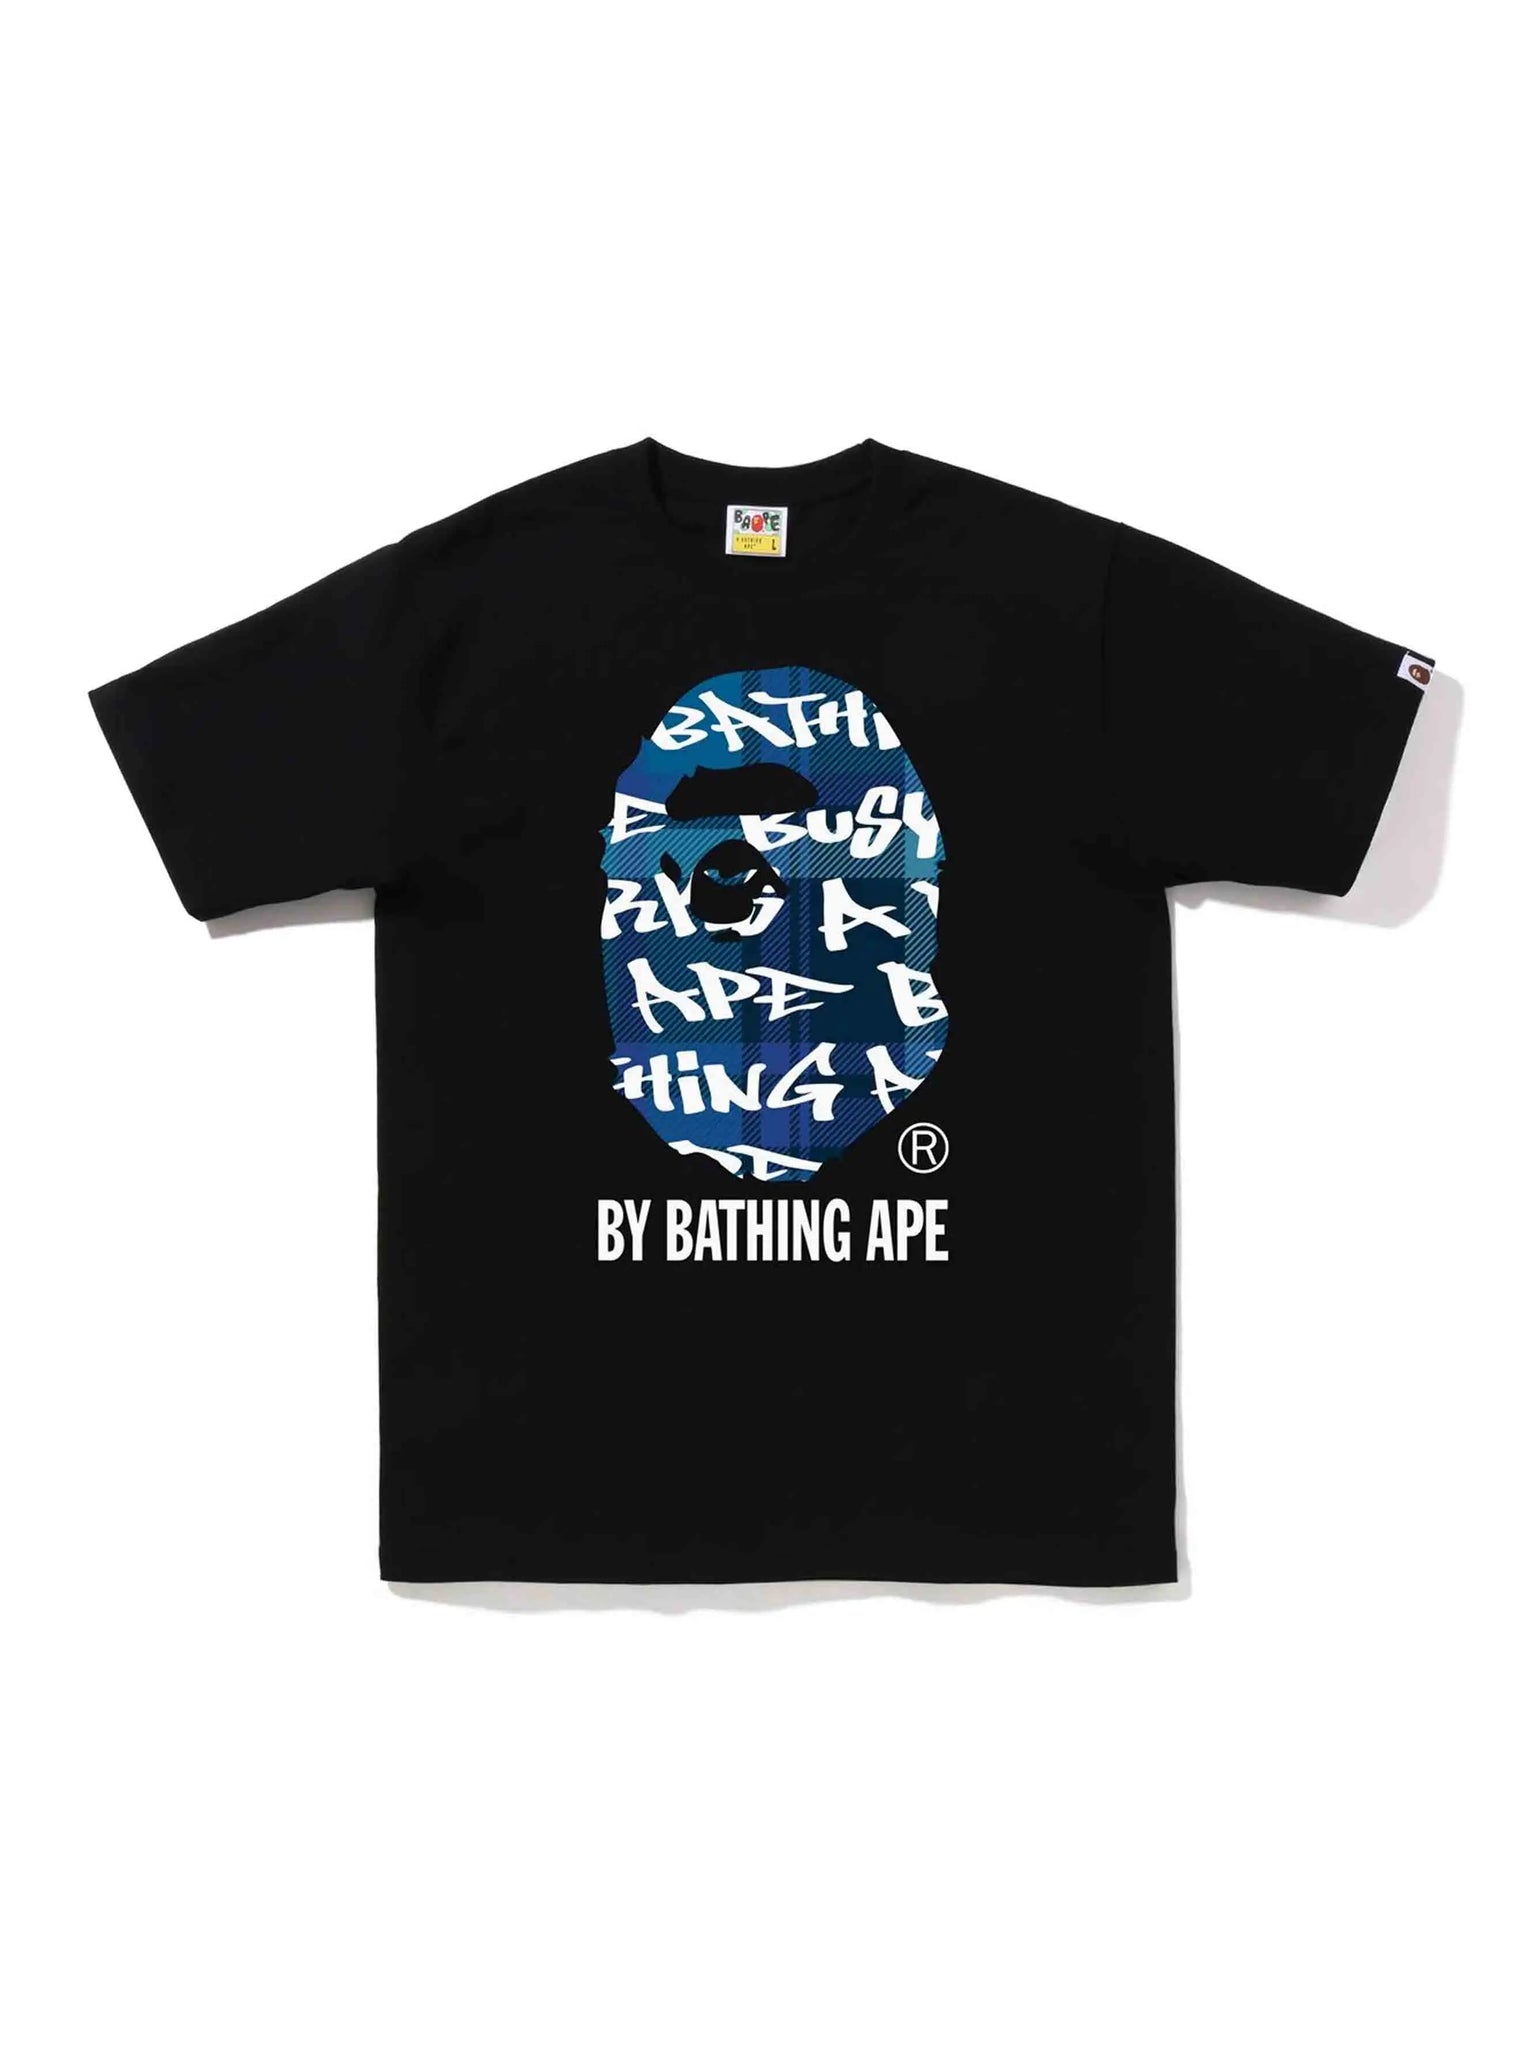 A Bathing Ape BAPE Graffiti Check By Bathing Ape Tee Black/Blue Prior